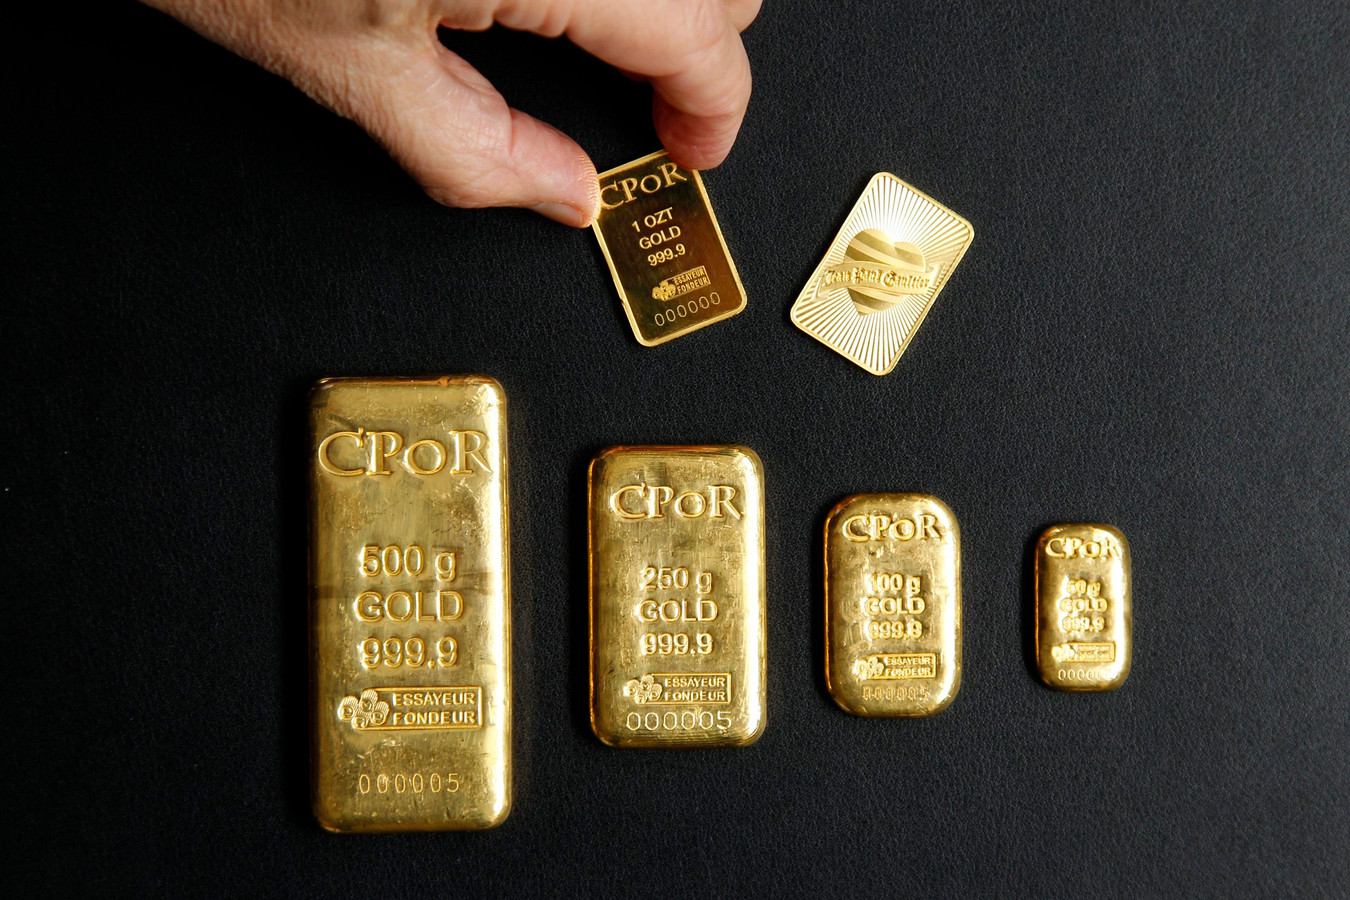 10 гр золота. 50 Граммовый слиток золота. 10 Граммовый слиток золота. Слиток золота 10 грамм. Золото слиток 10гр.